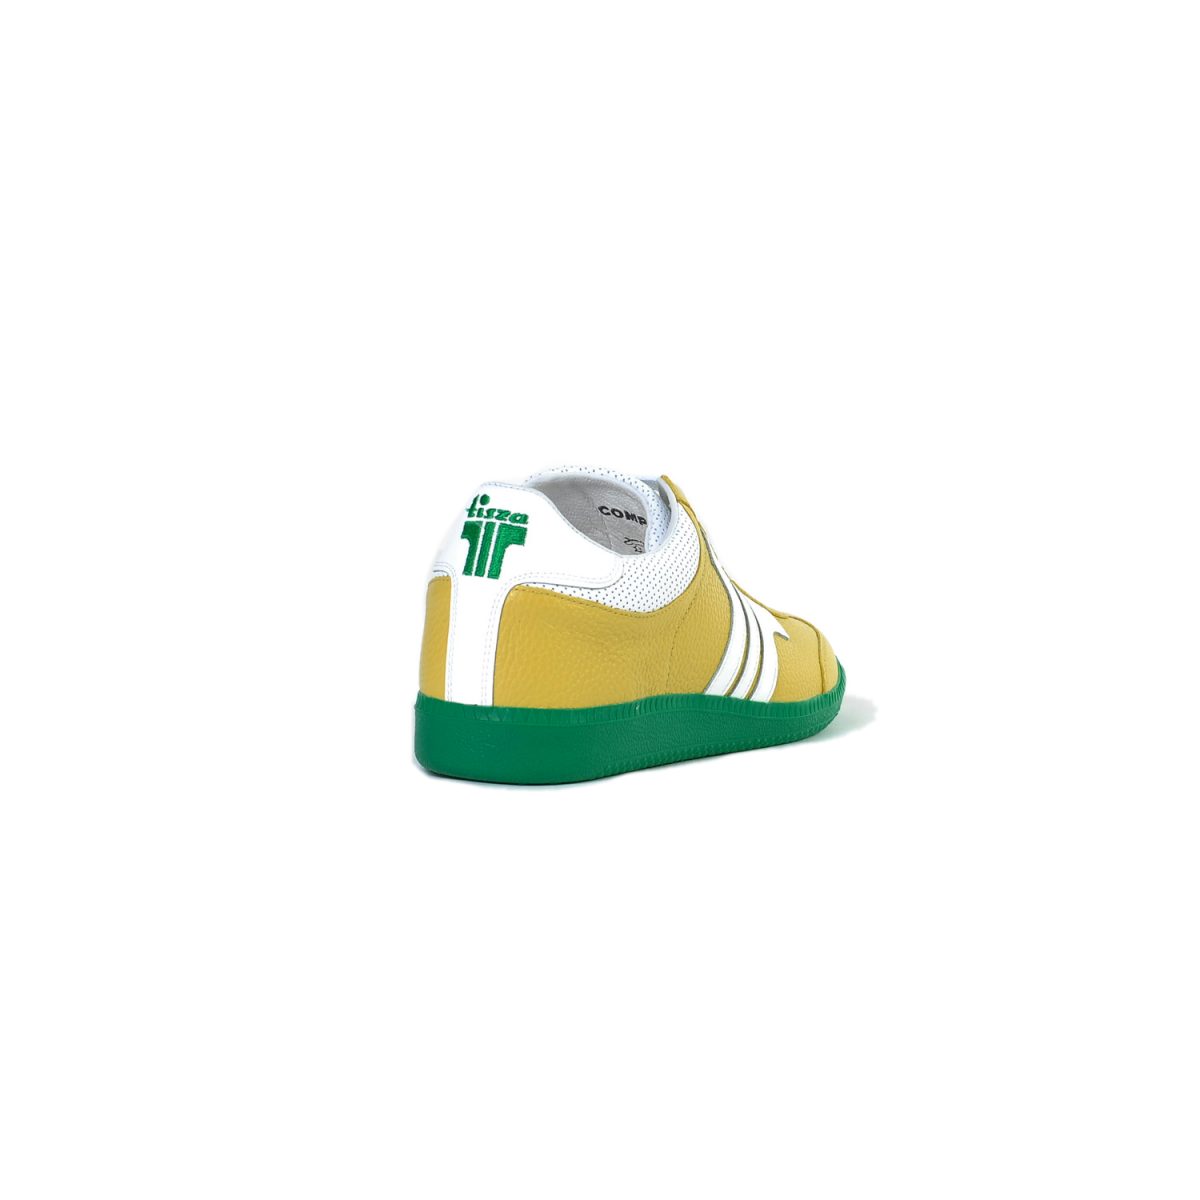 Tisza shoes - Compakt - Brasil